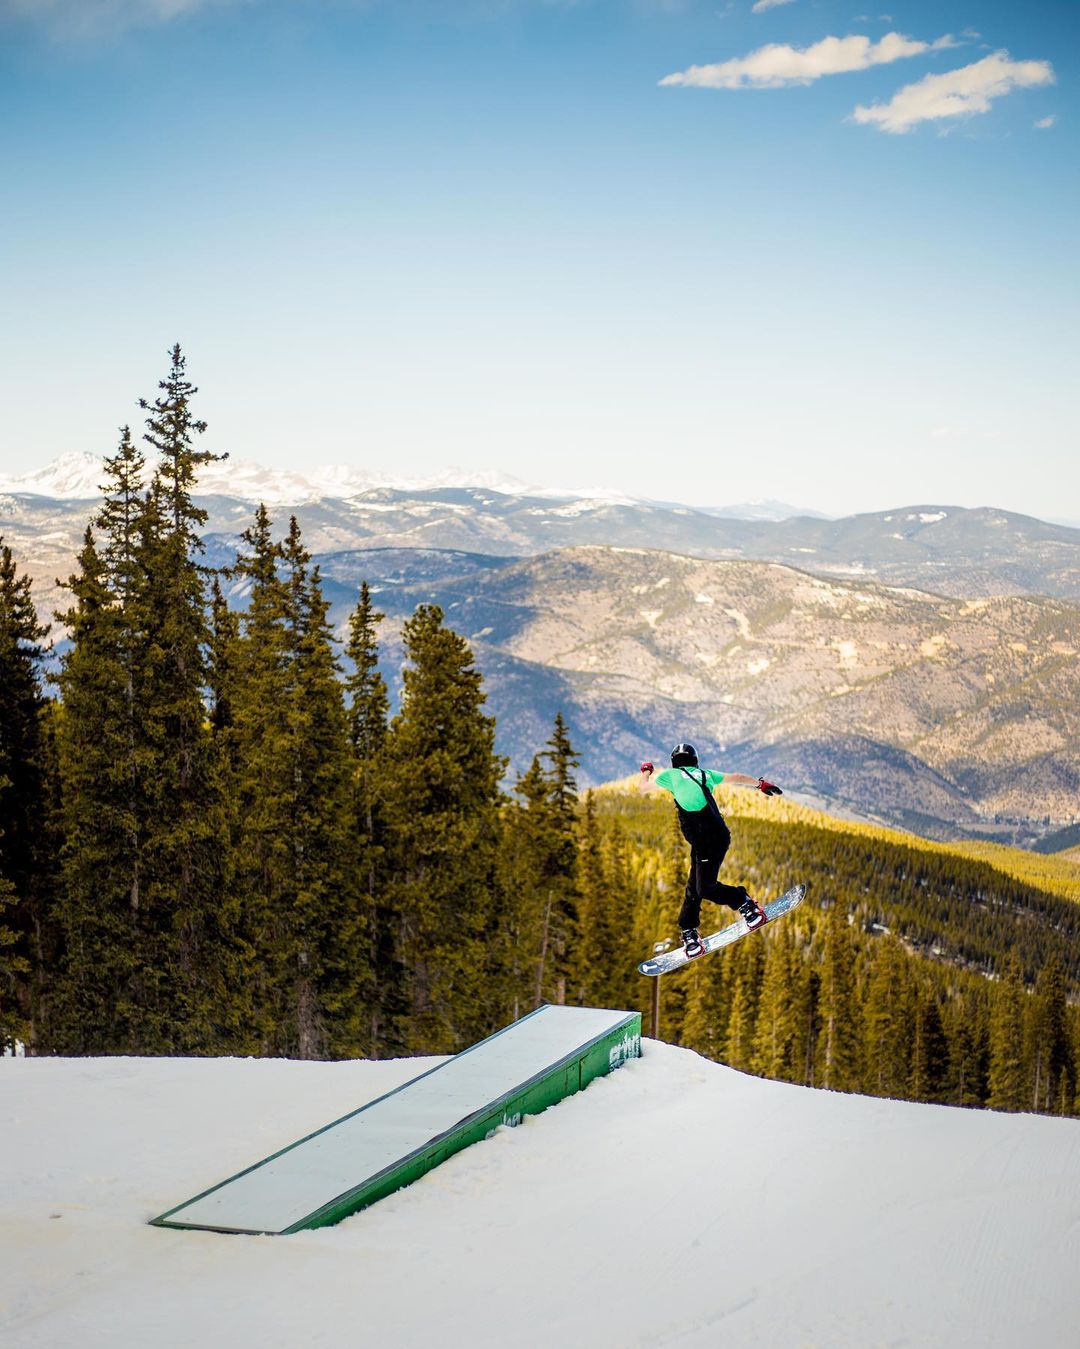 Snowboarder going off a ramp on Echo Mountain. Photo by Instagram user @tuckerowan